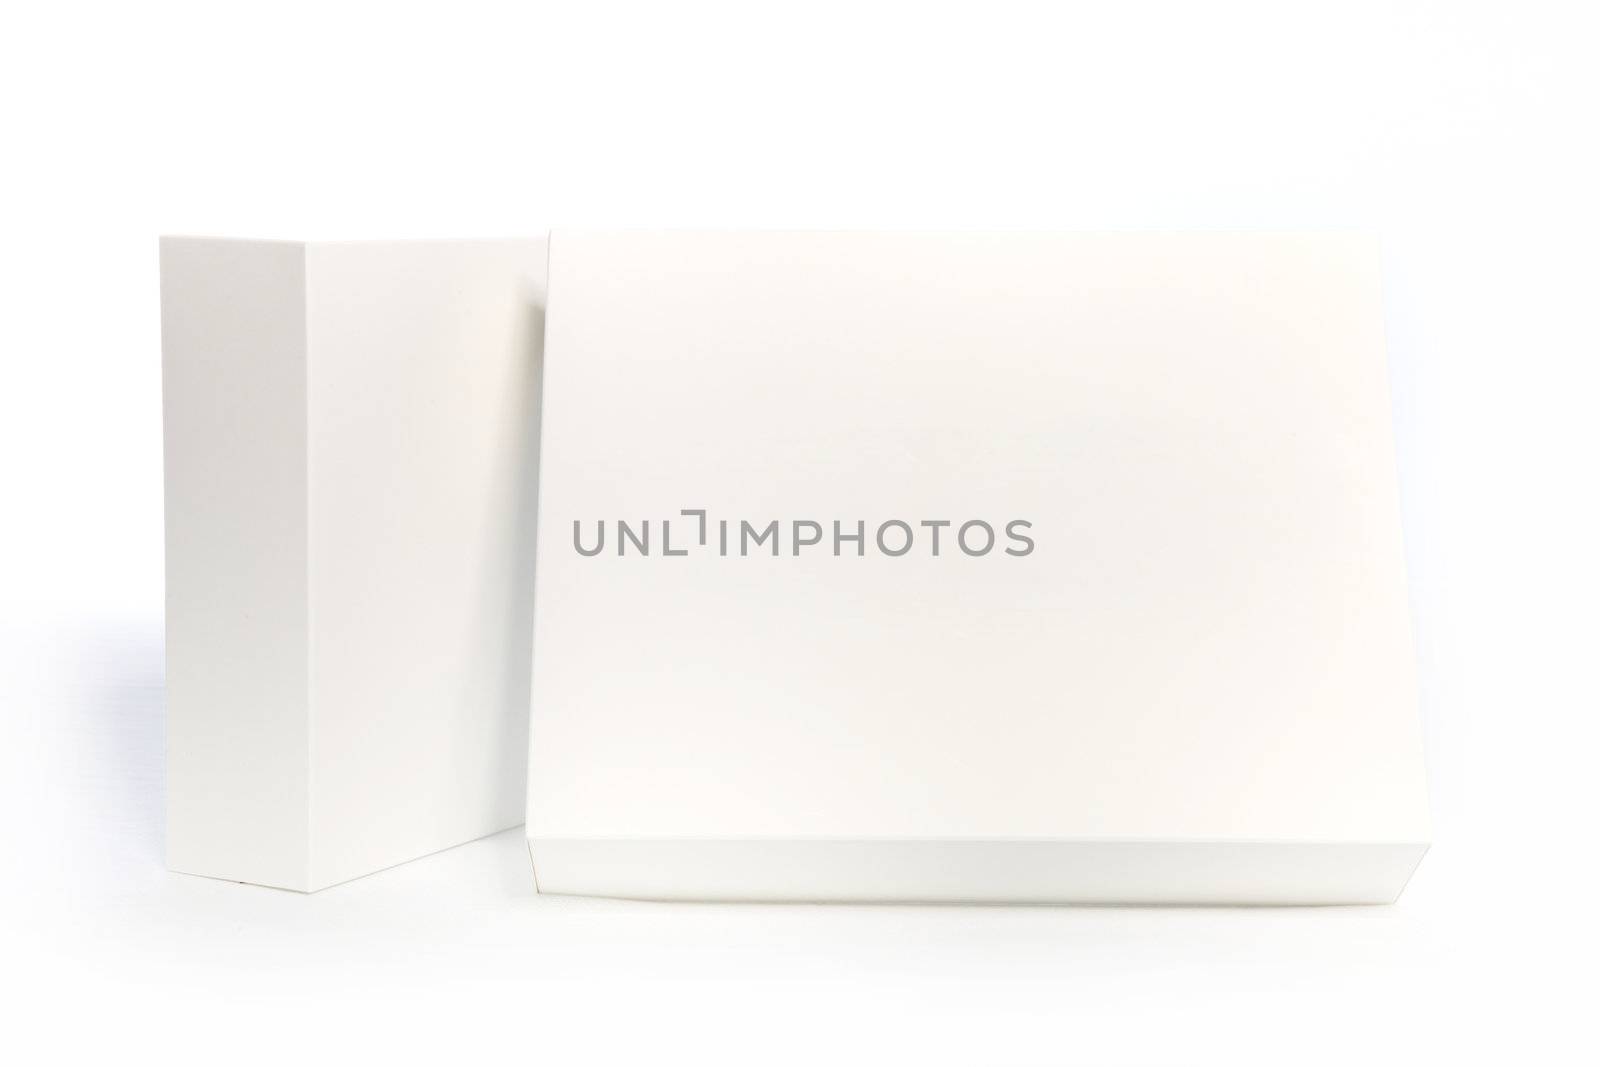 Rectangular white boxes on white background by Farina6000